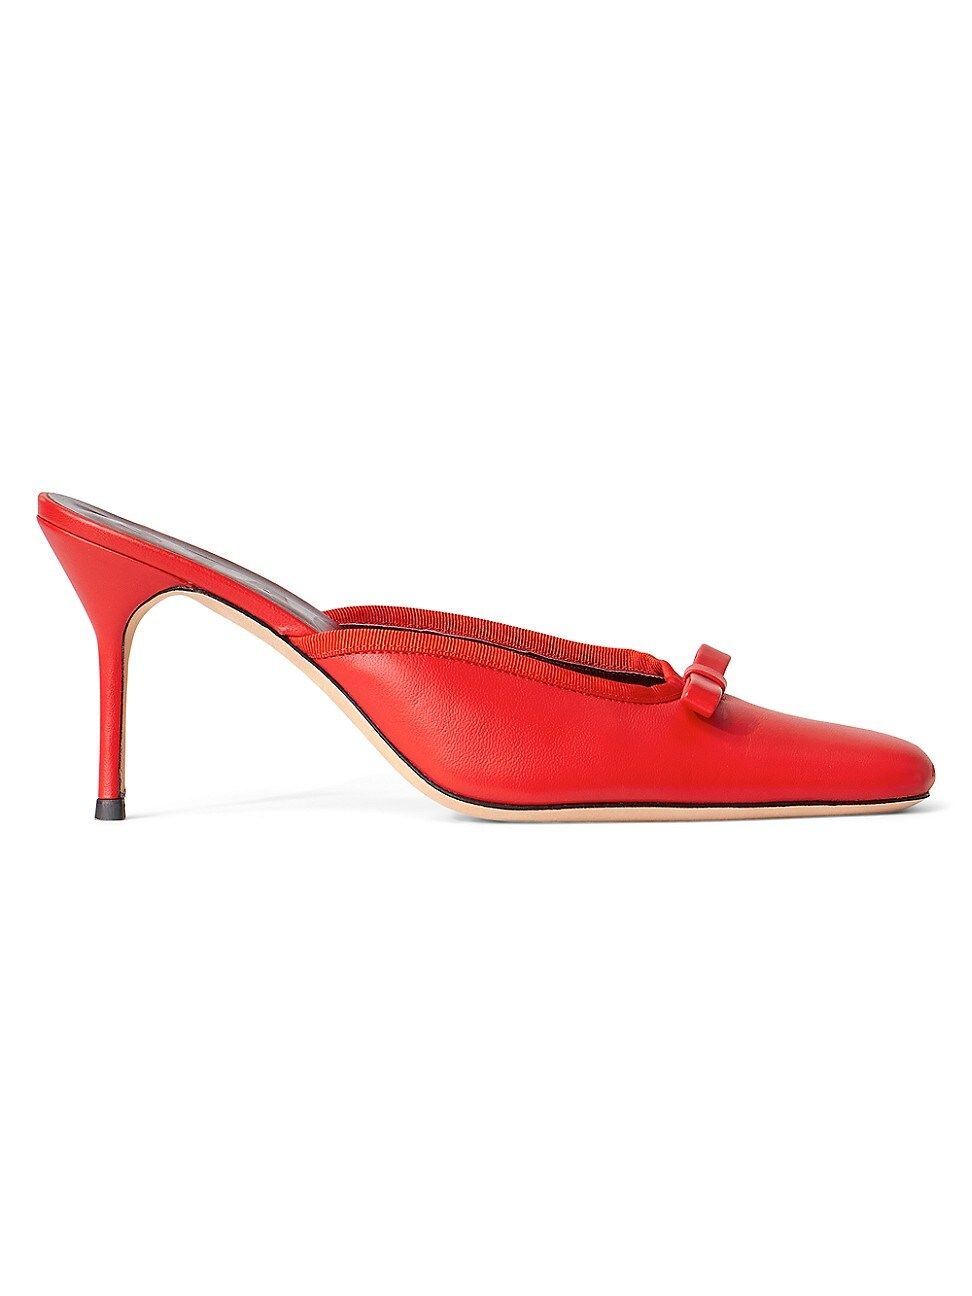 Women's Karine Leather Heels - Cherry - Size 5.5 | Saks Fifth Avenue